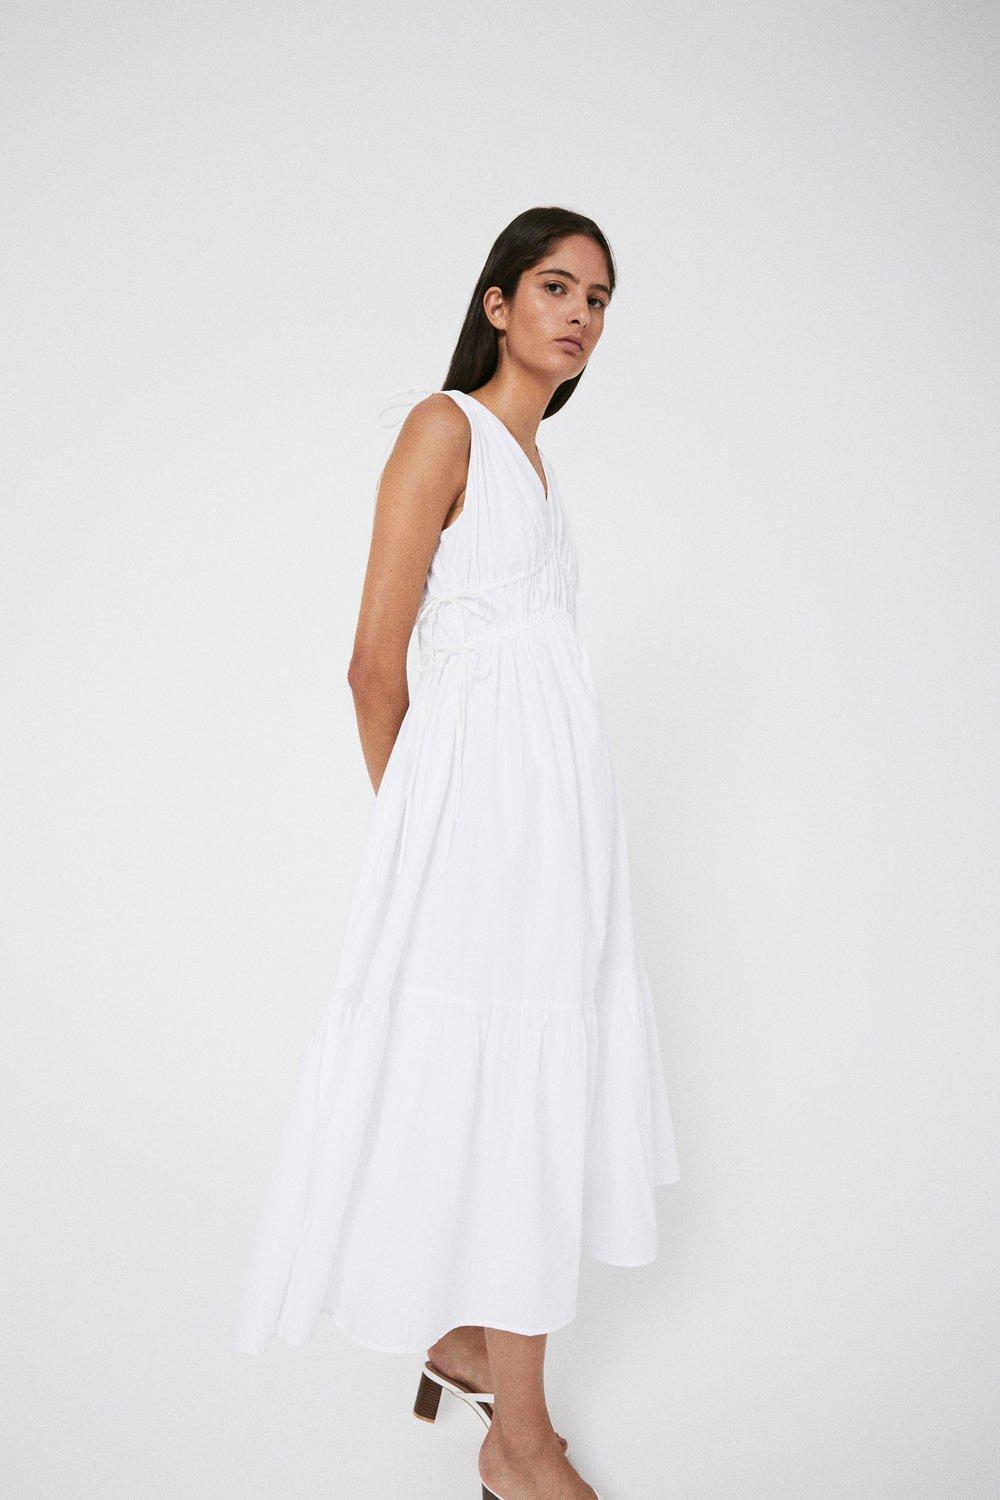 Dresses | Summer Dresses & Long Sleeve Dresses | Warehouse UK